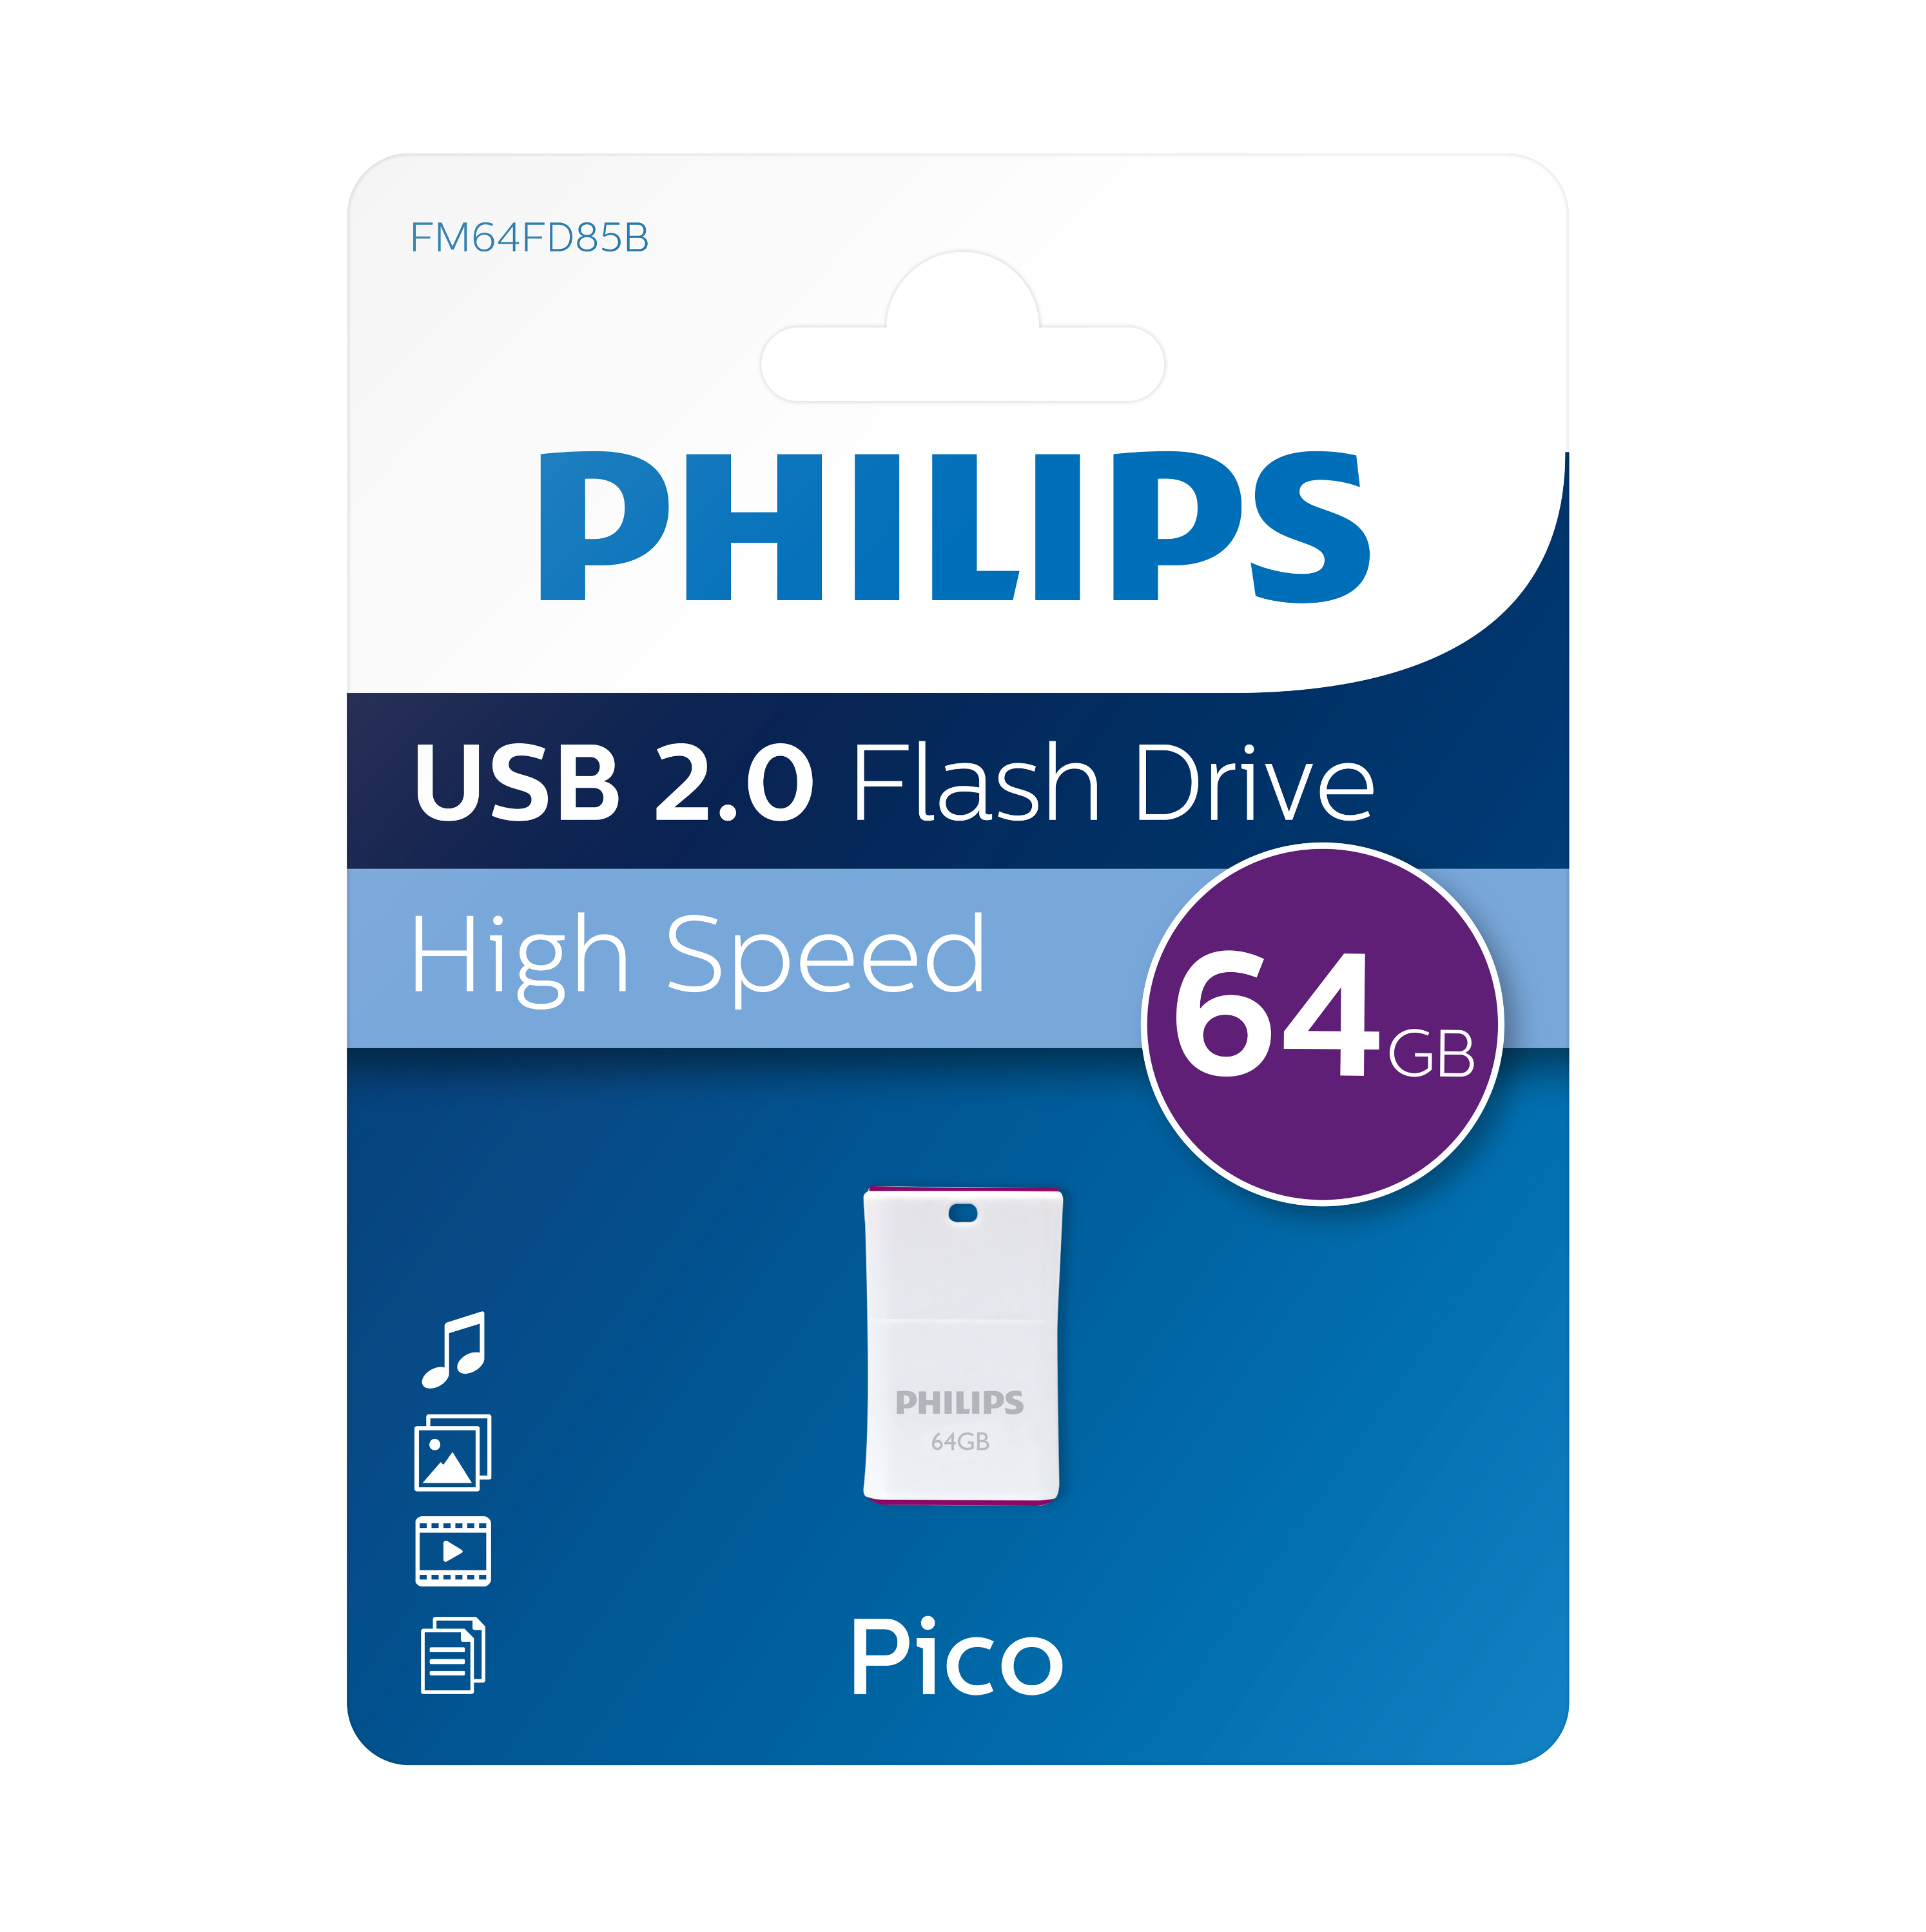 PHILIPS USB Stick Pico Edition, GB) 64 USB-Stick weiss, 64GB (Weiß